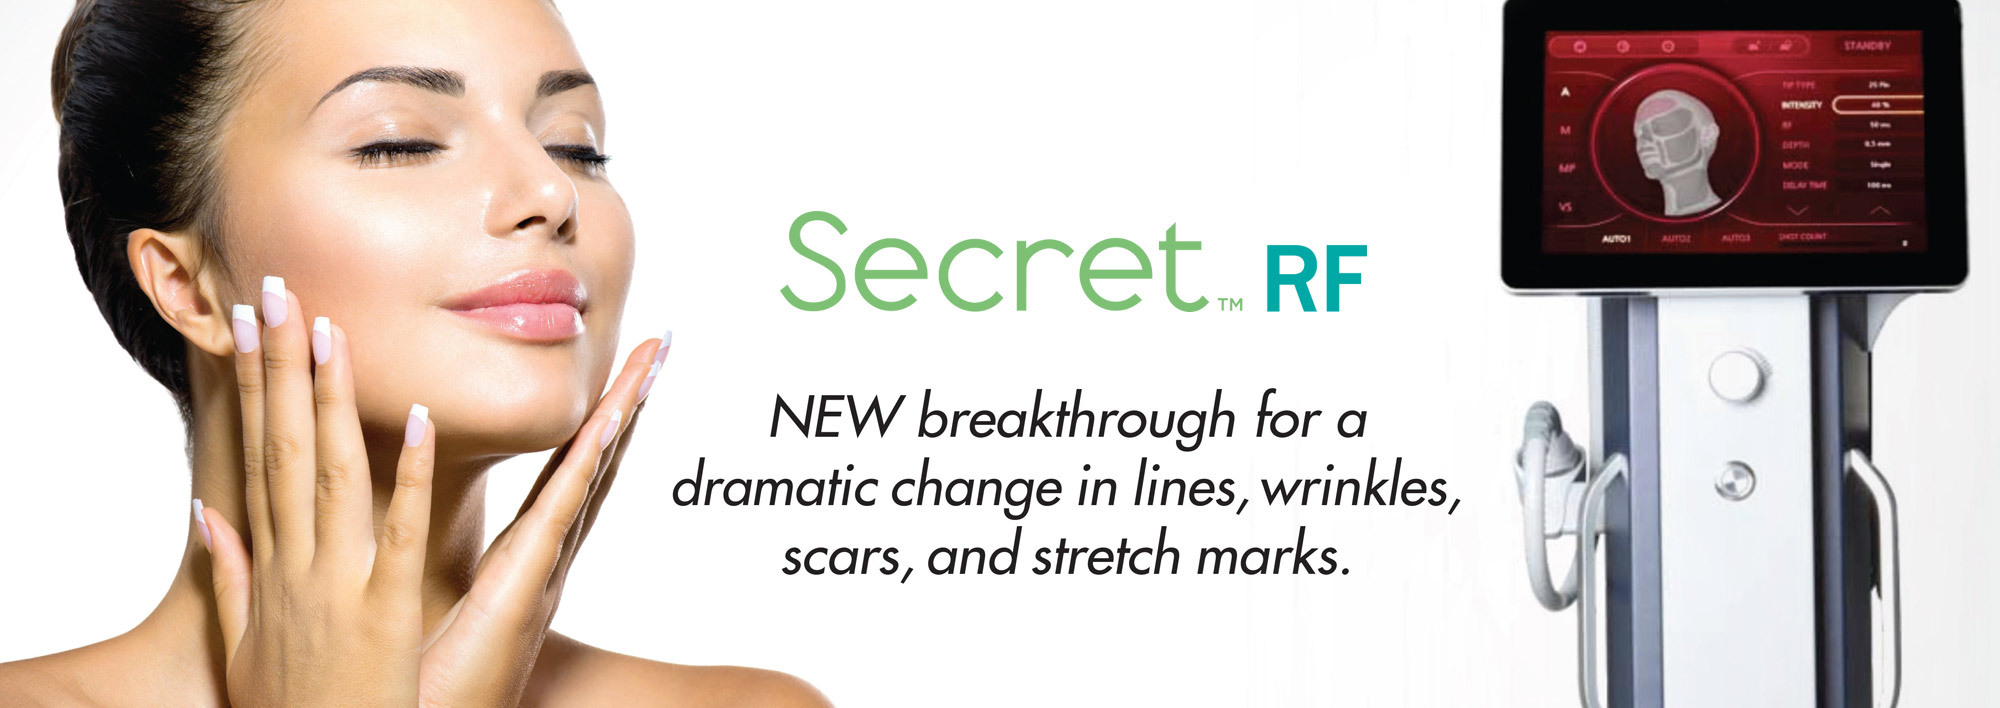 Secret RF breakthrough treatment